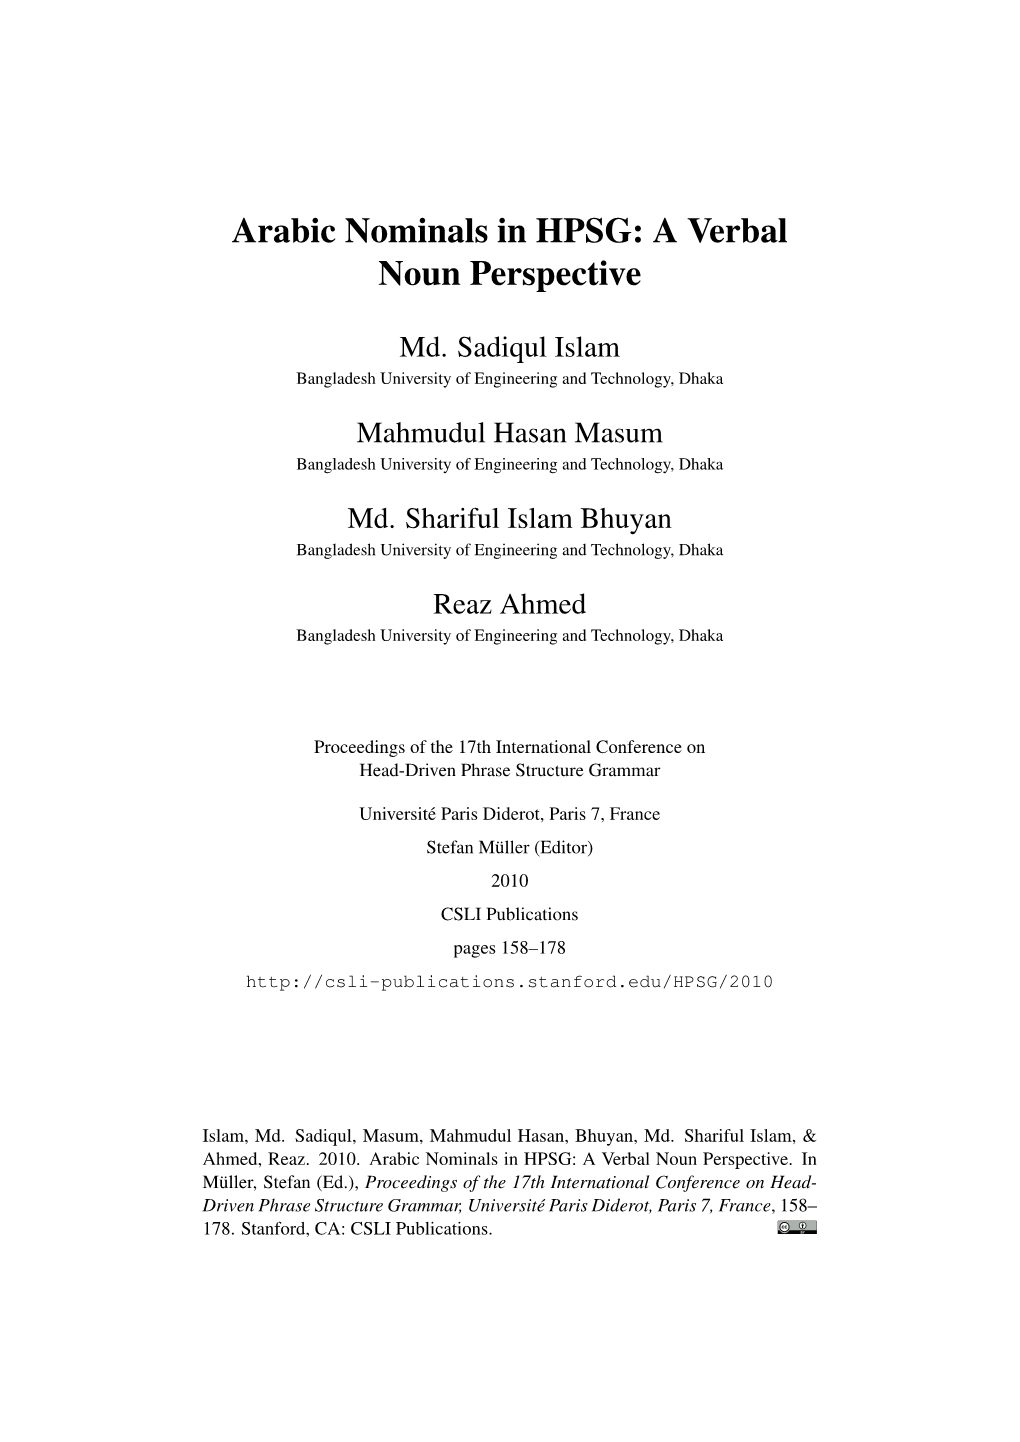 Arabic Nominals in HPSG: a Verbal Noun Perspective